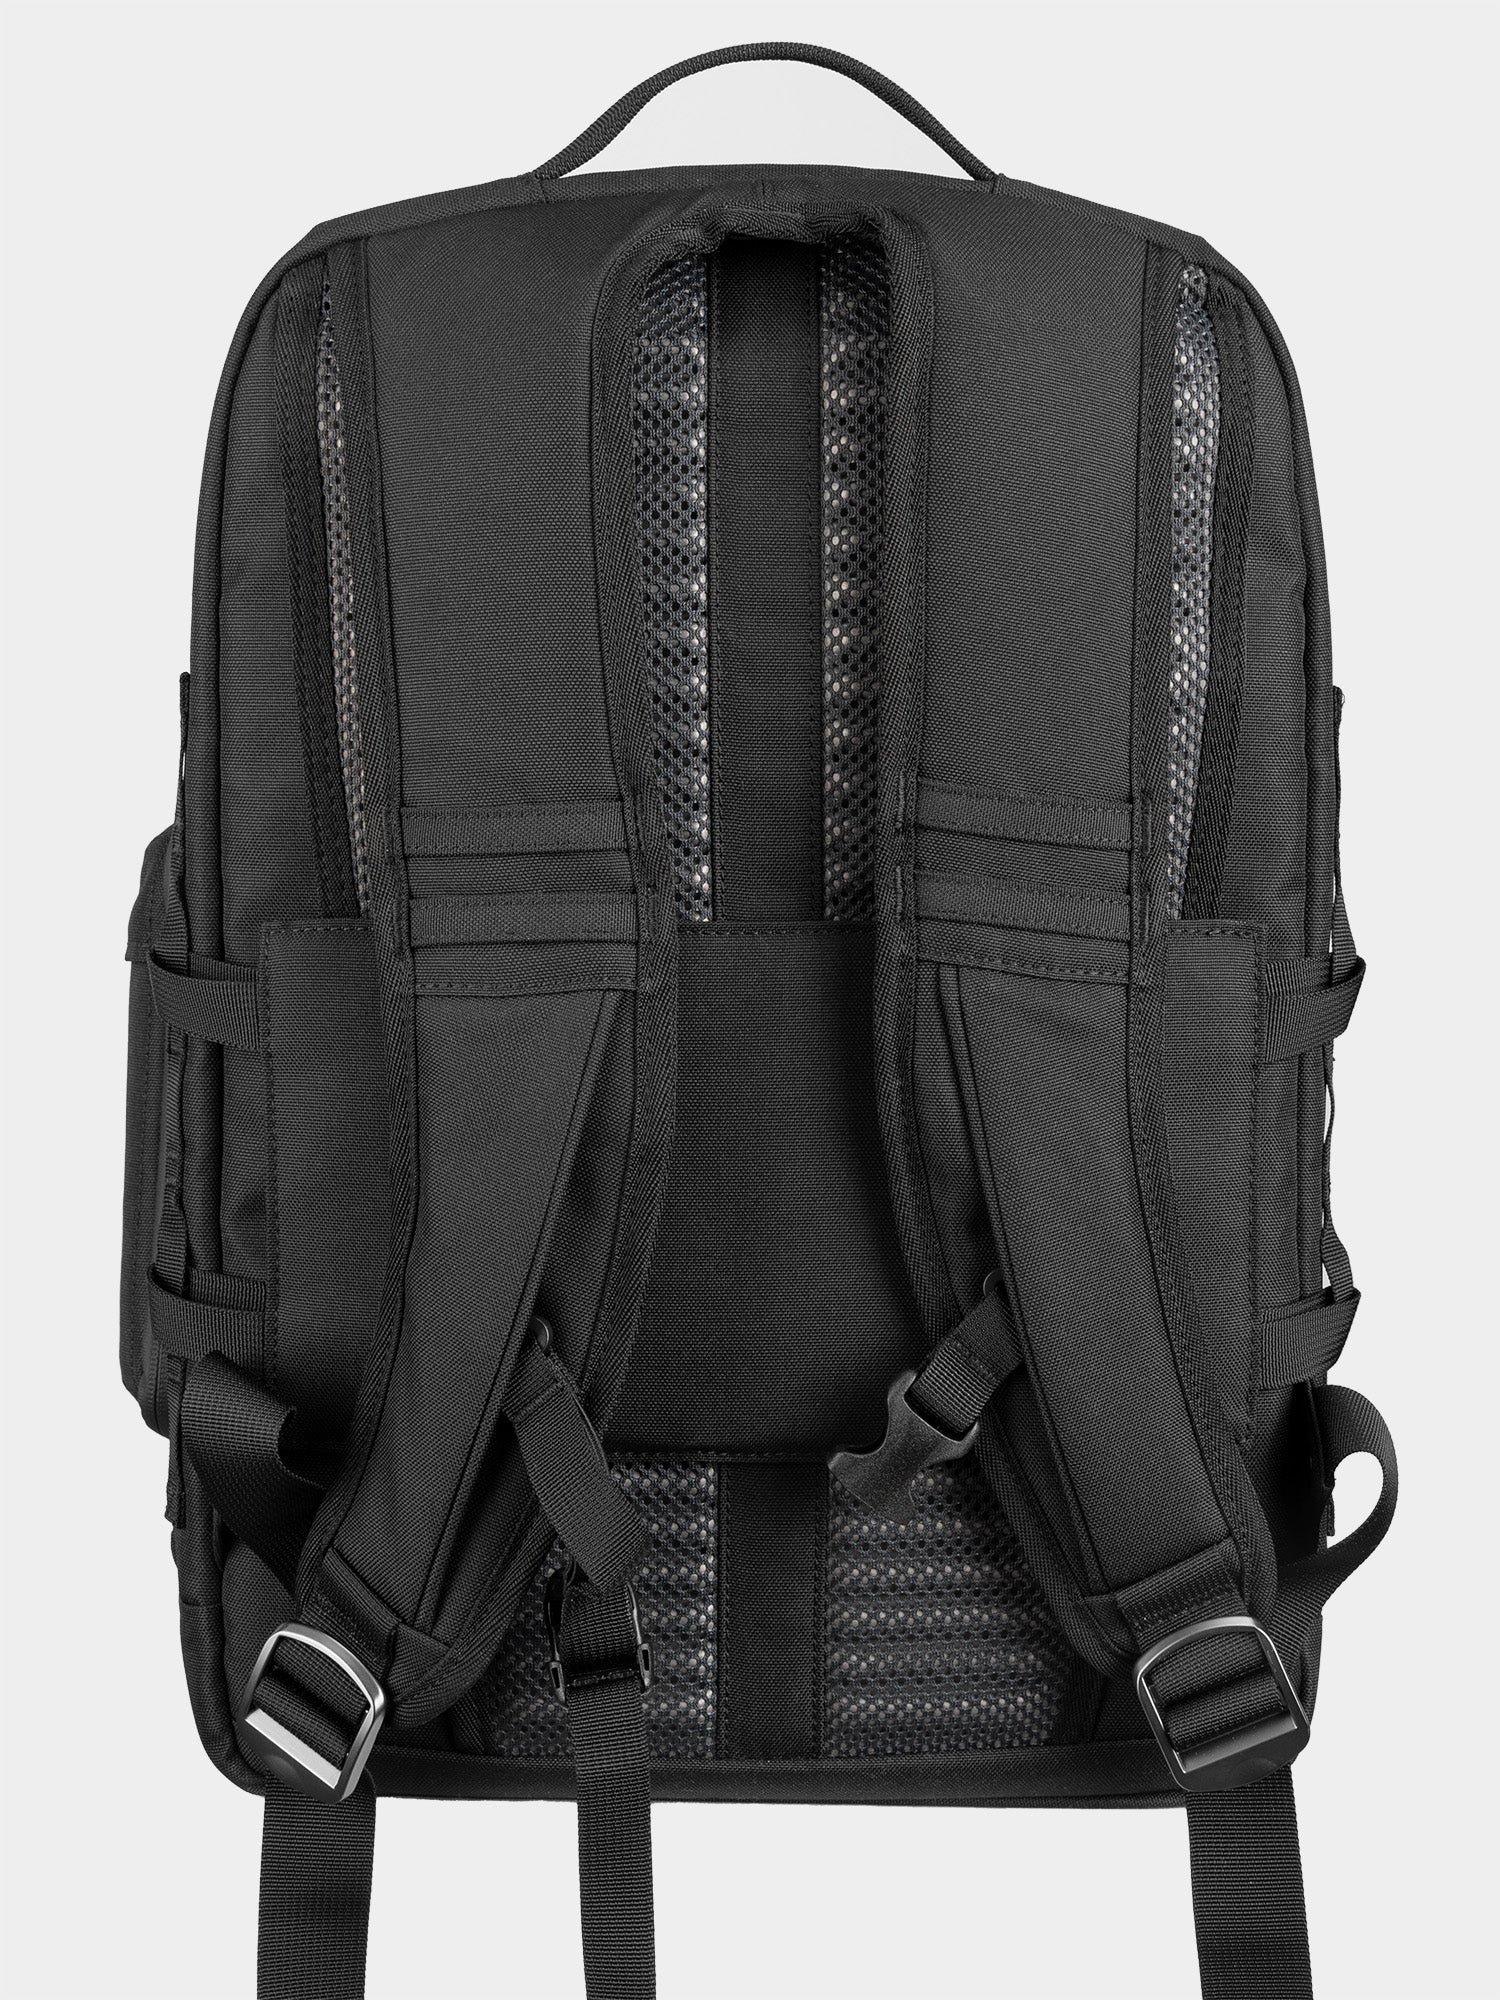 Bratz | Backpack